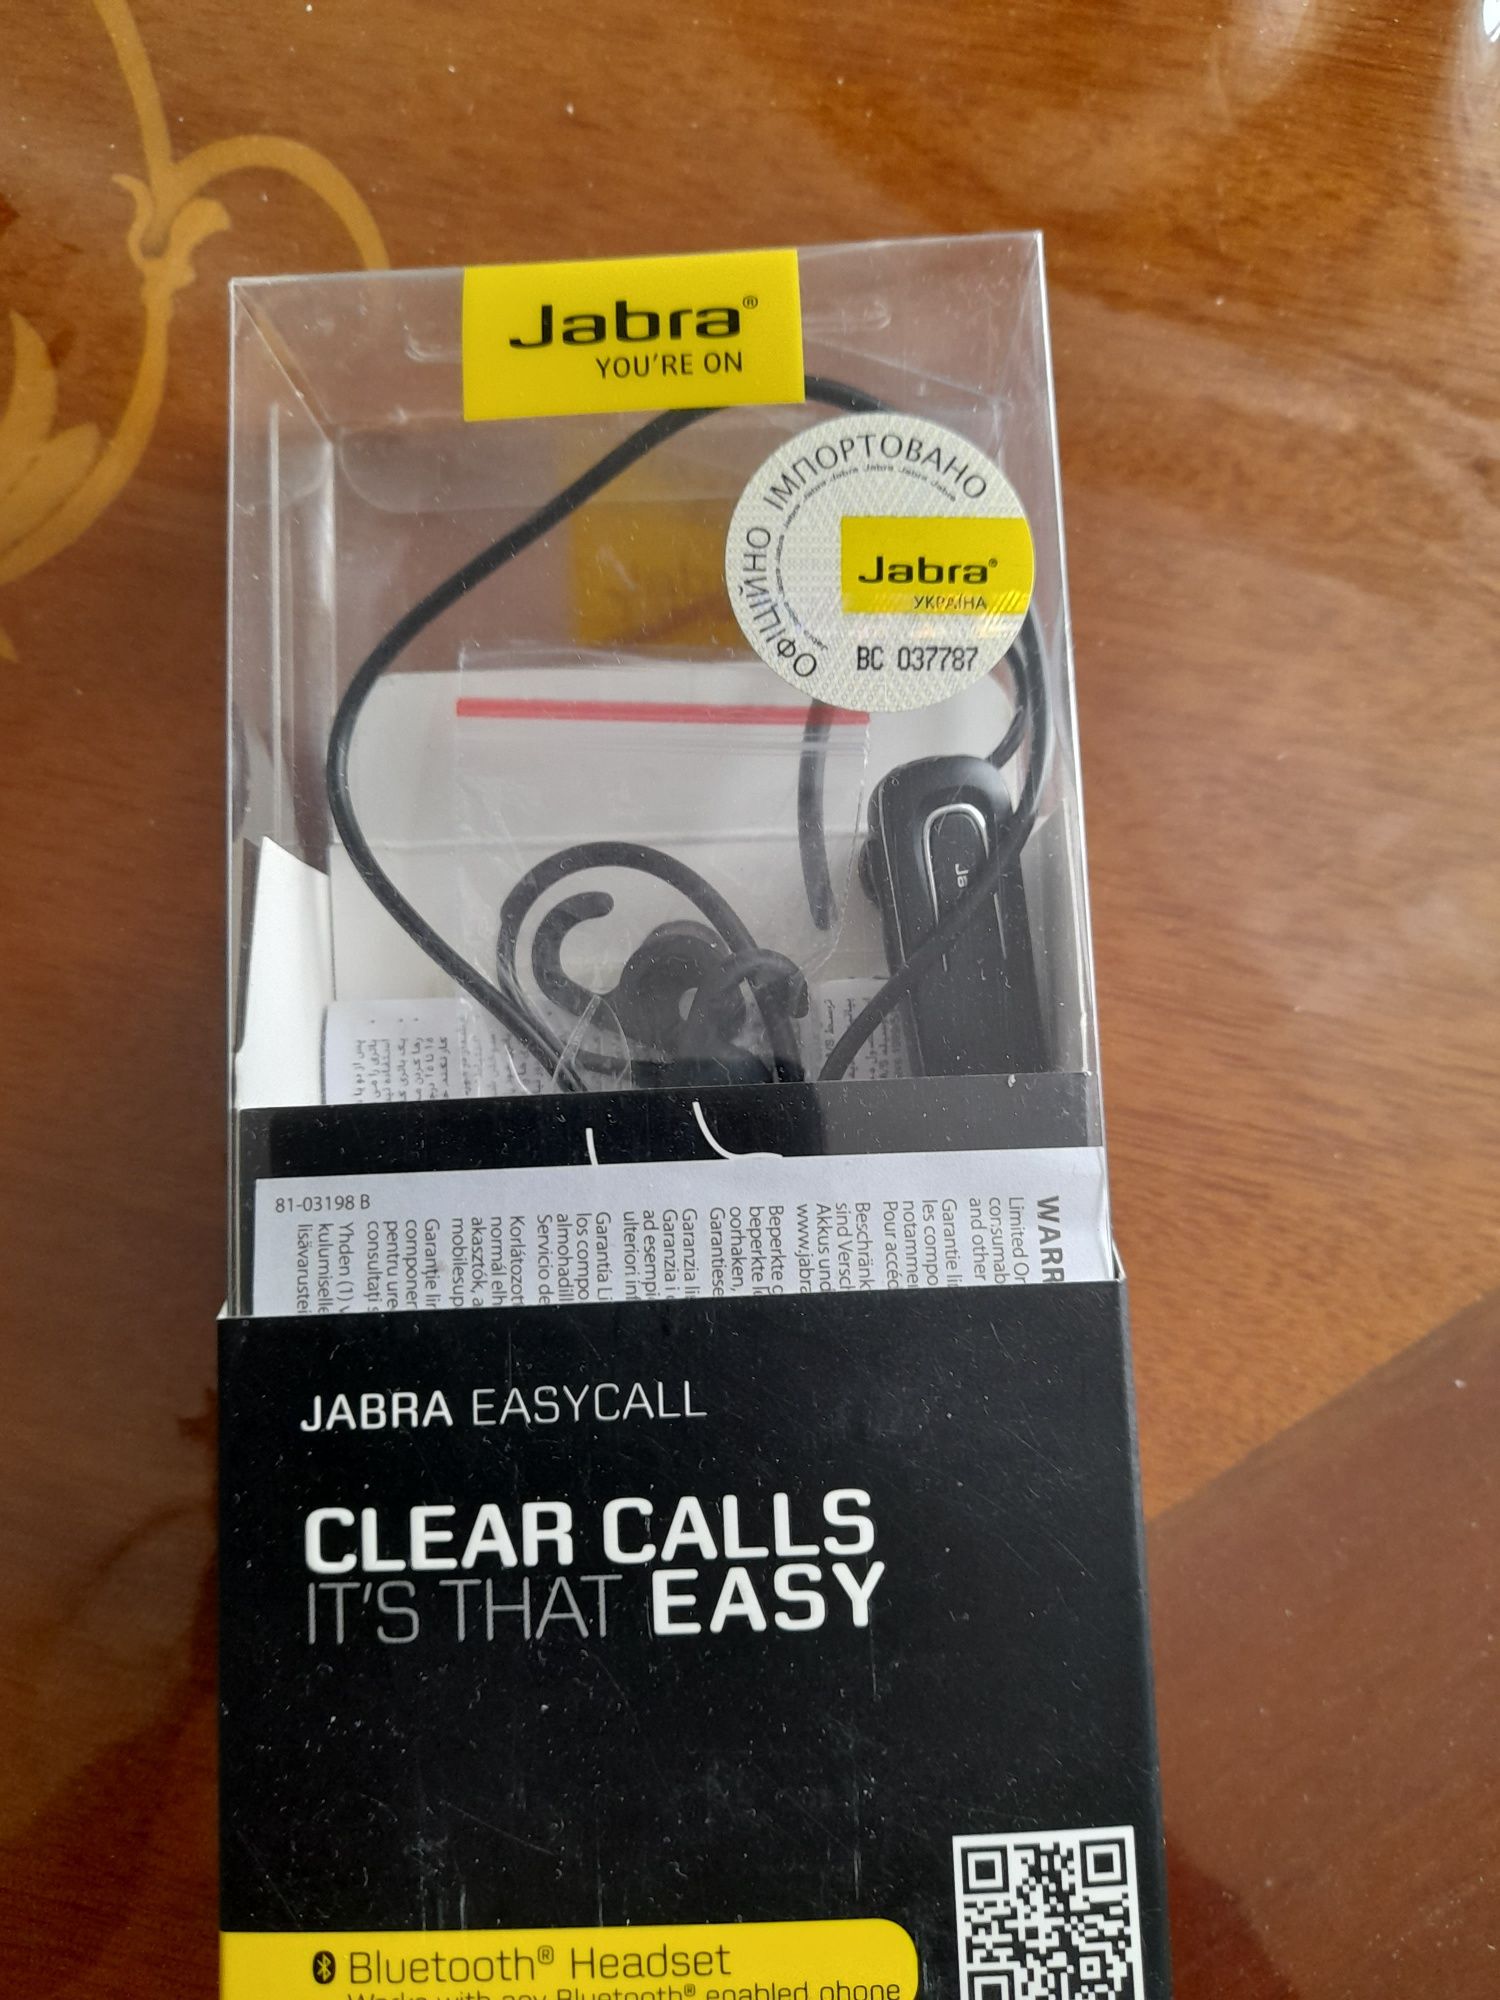 Продам Bluefooth Headset Jabra .